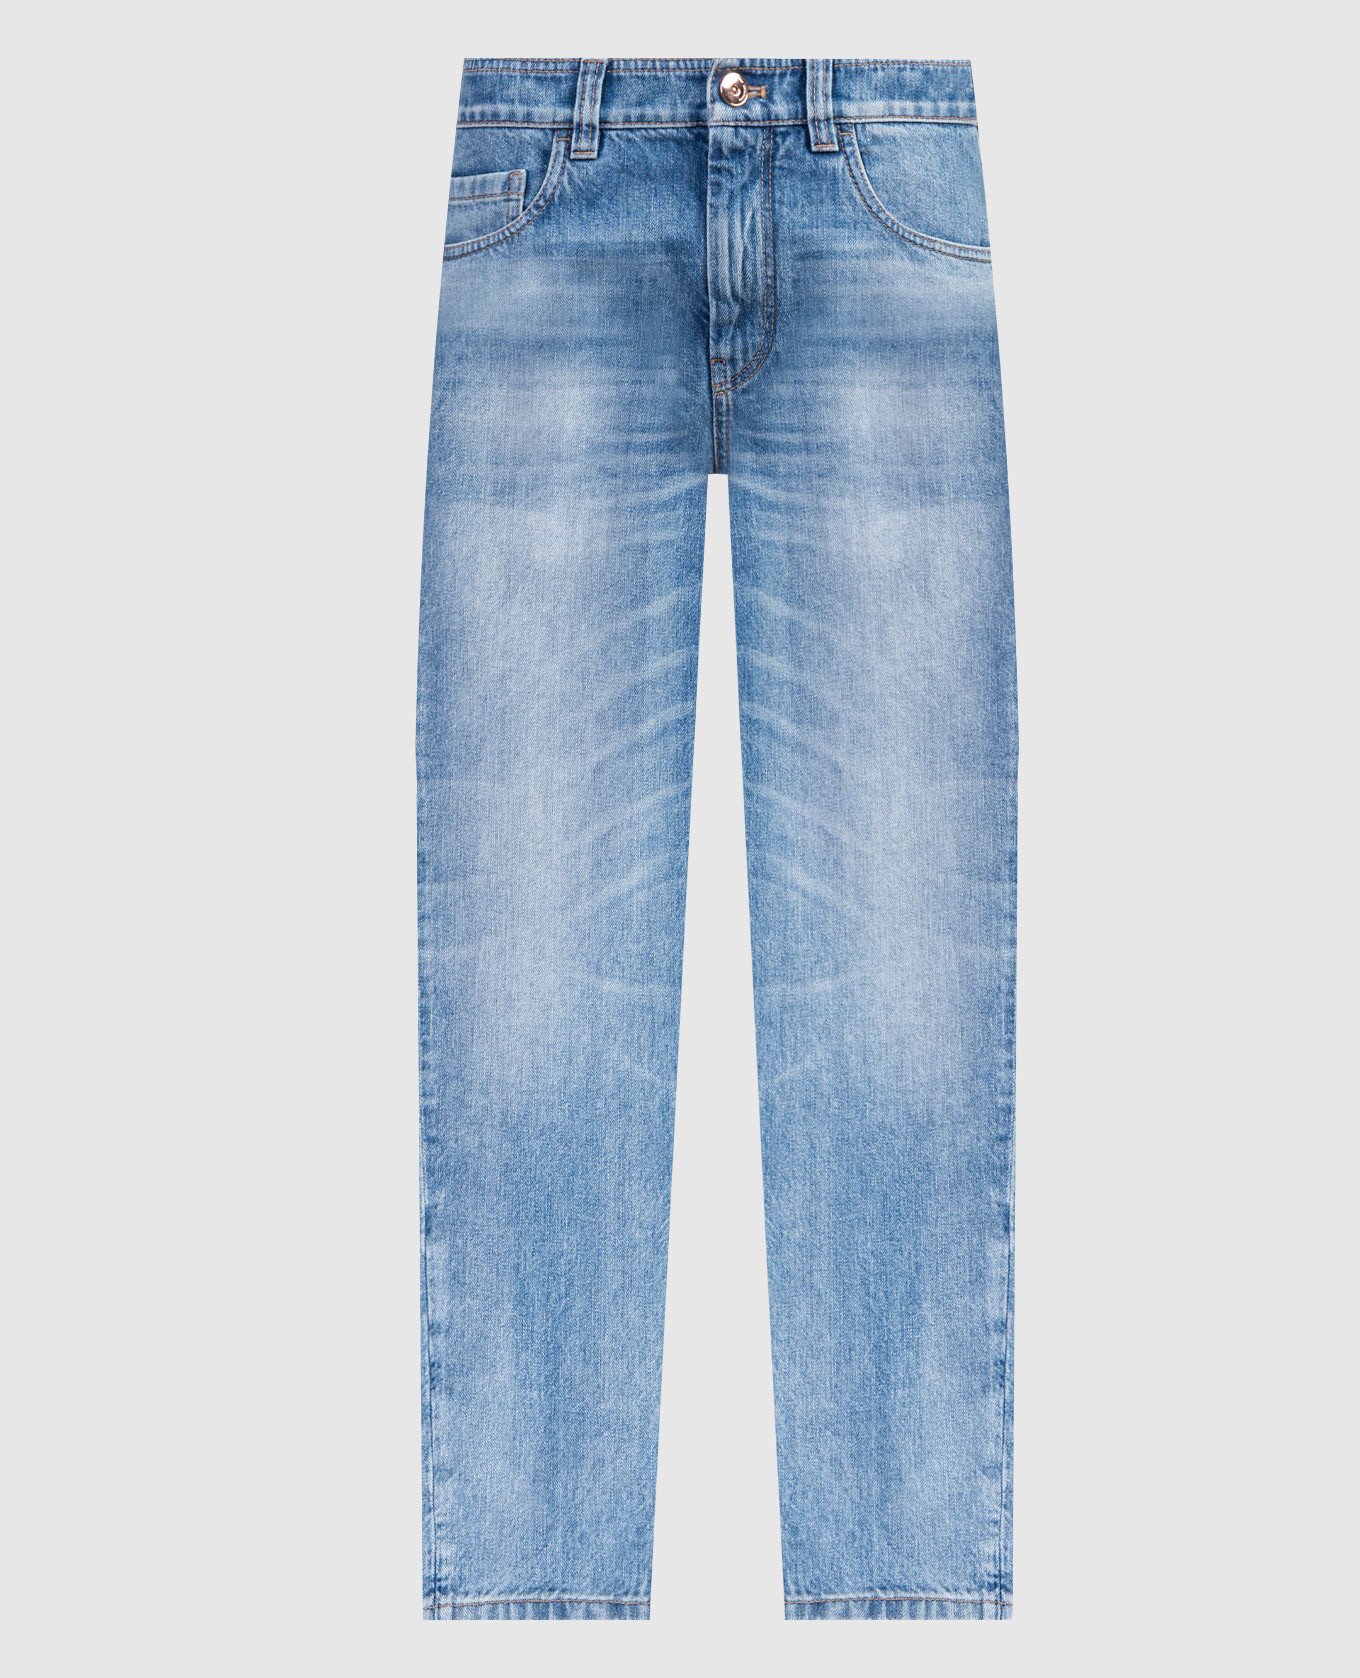 Distressed blue jeans with ecolathuni monil chain